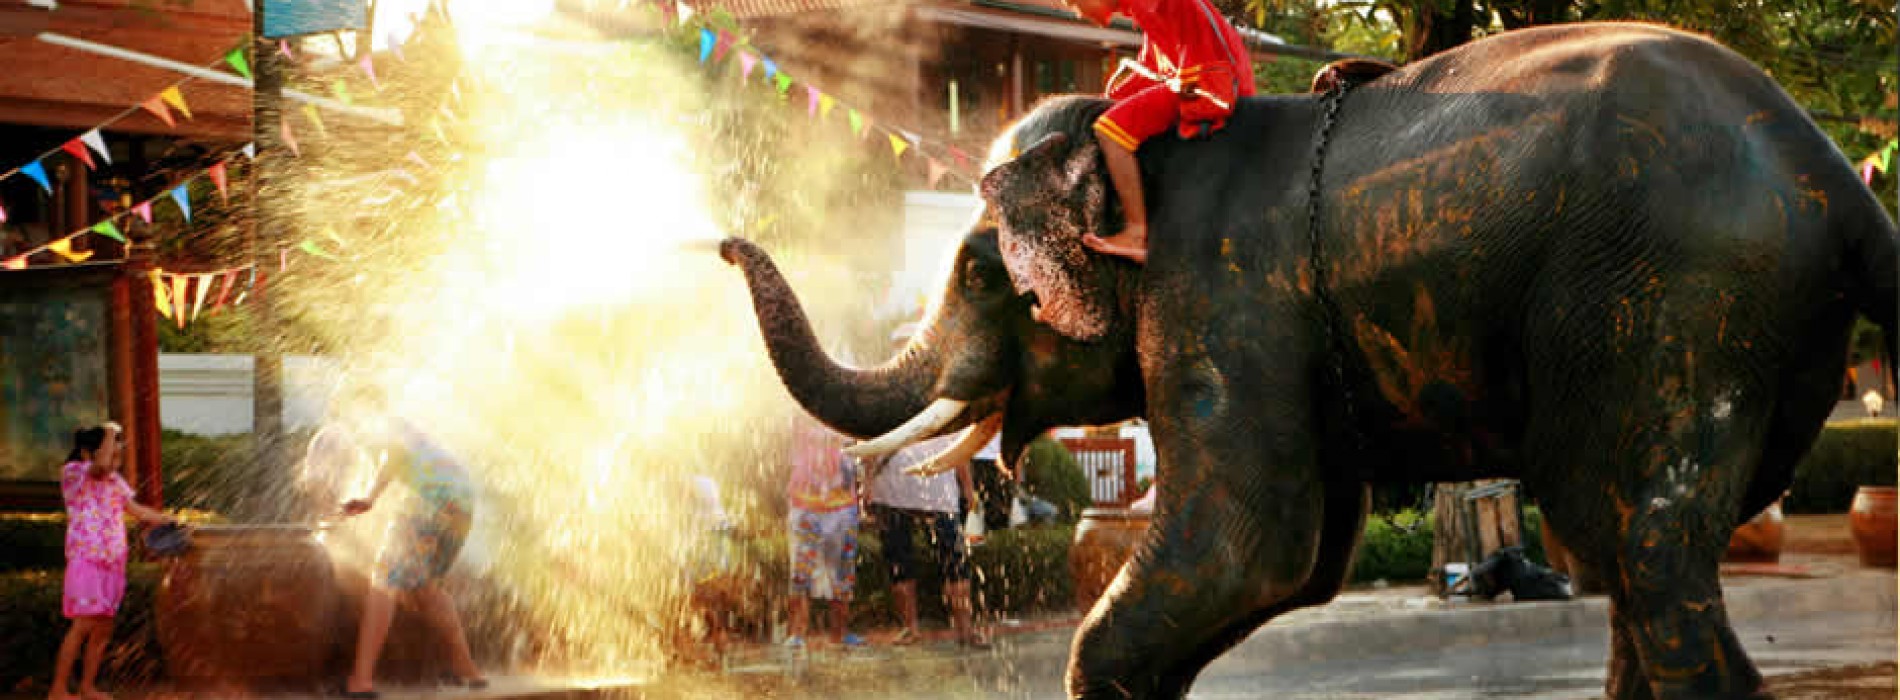 Travel To Thailand To Celebrate Songkran Festival